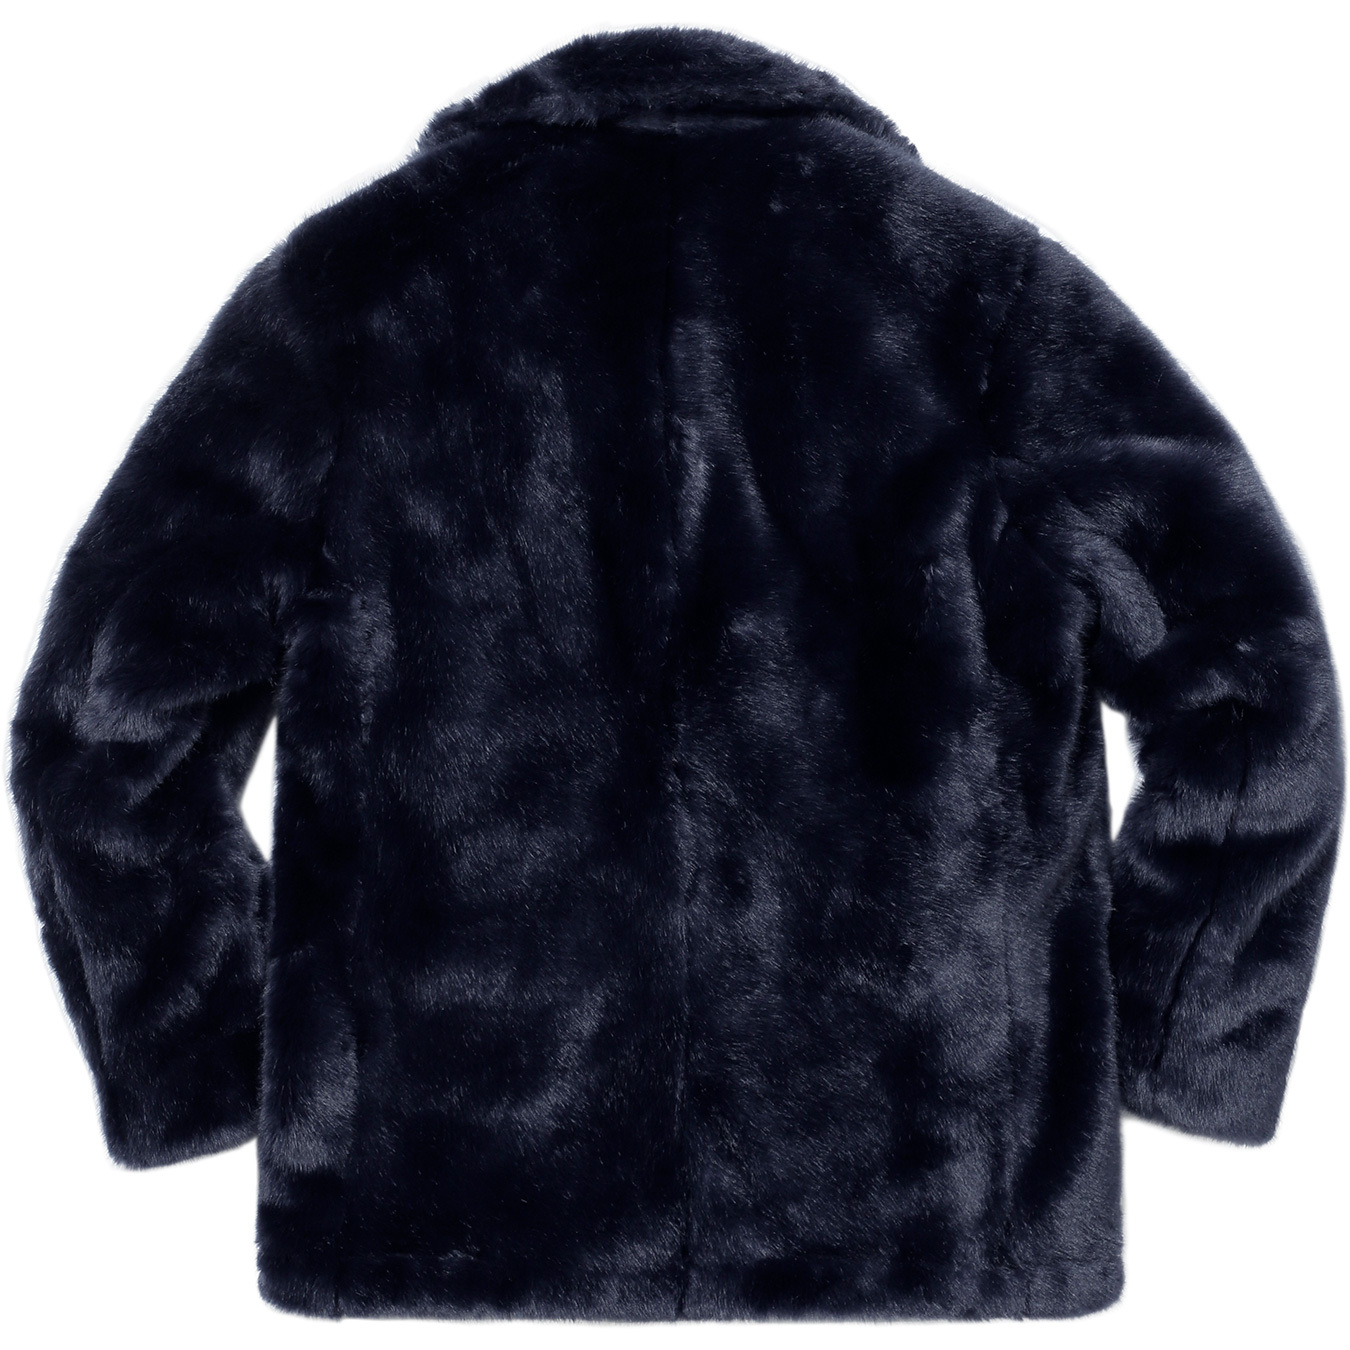 NEW限定品】 17AW Schott × Supreme Faux Peacoat Fur ジャケット 